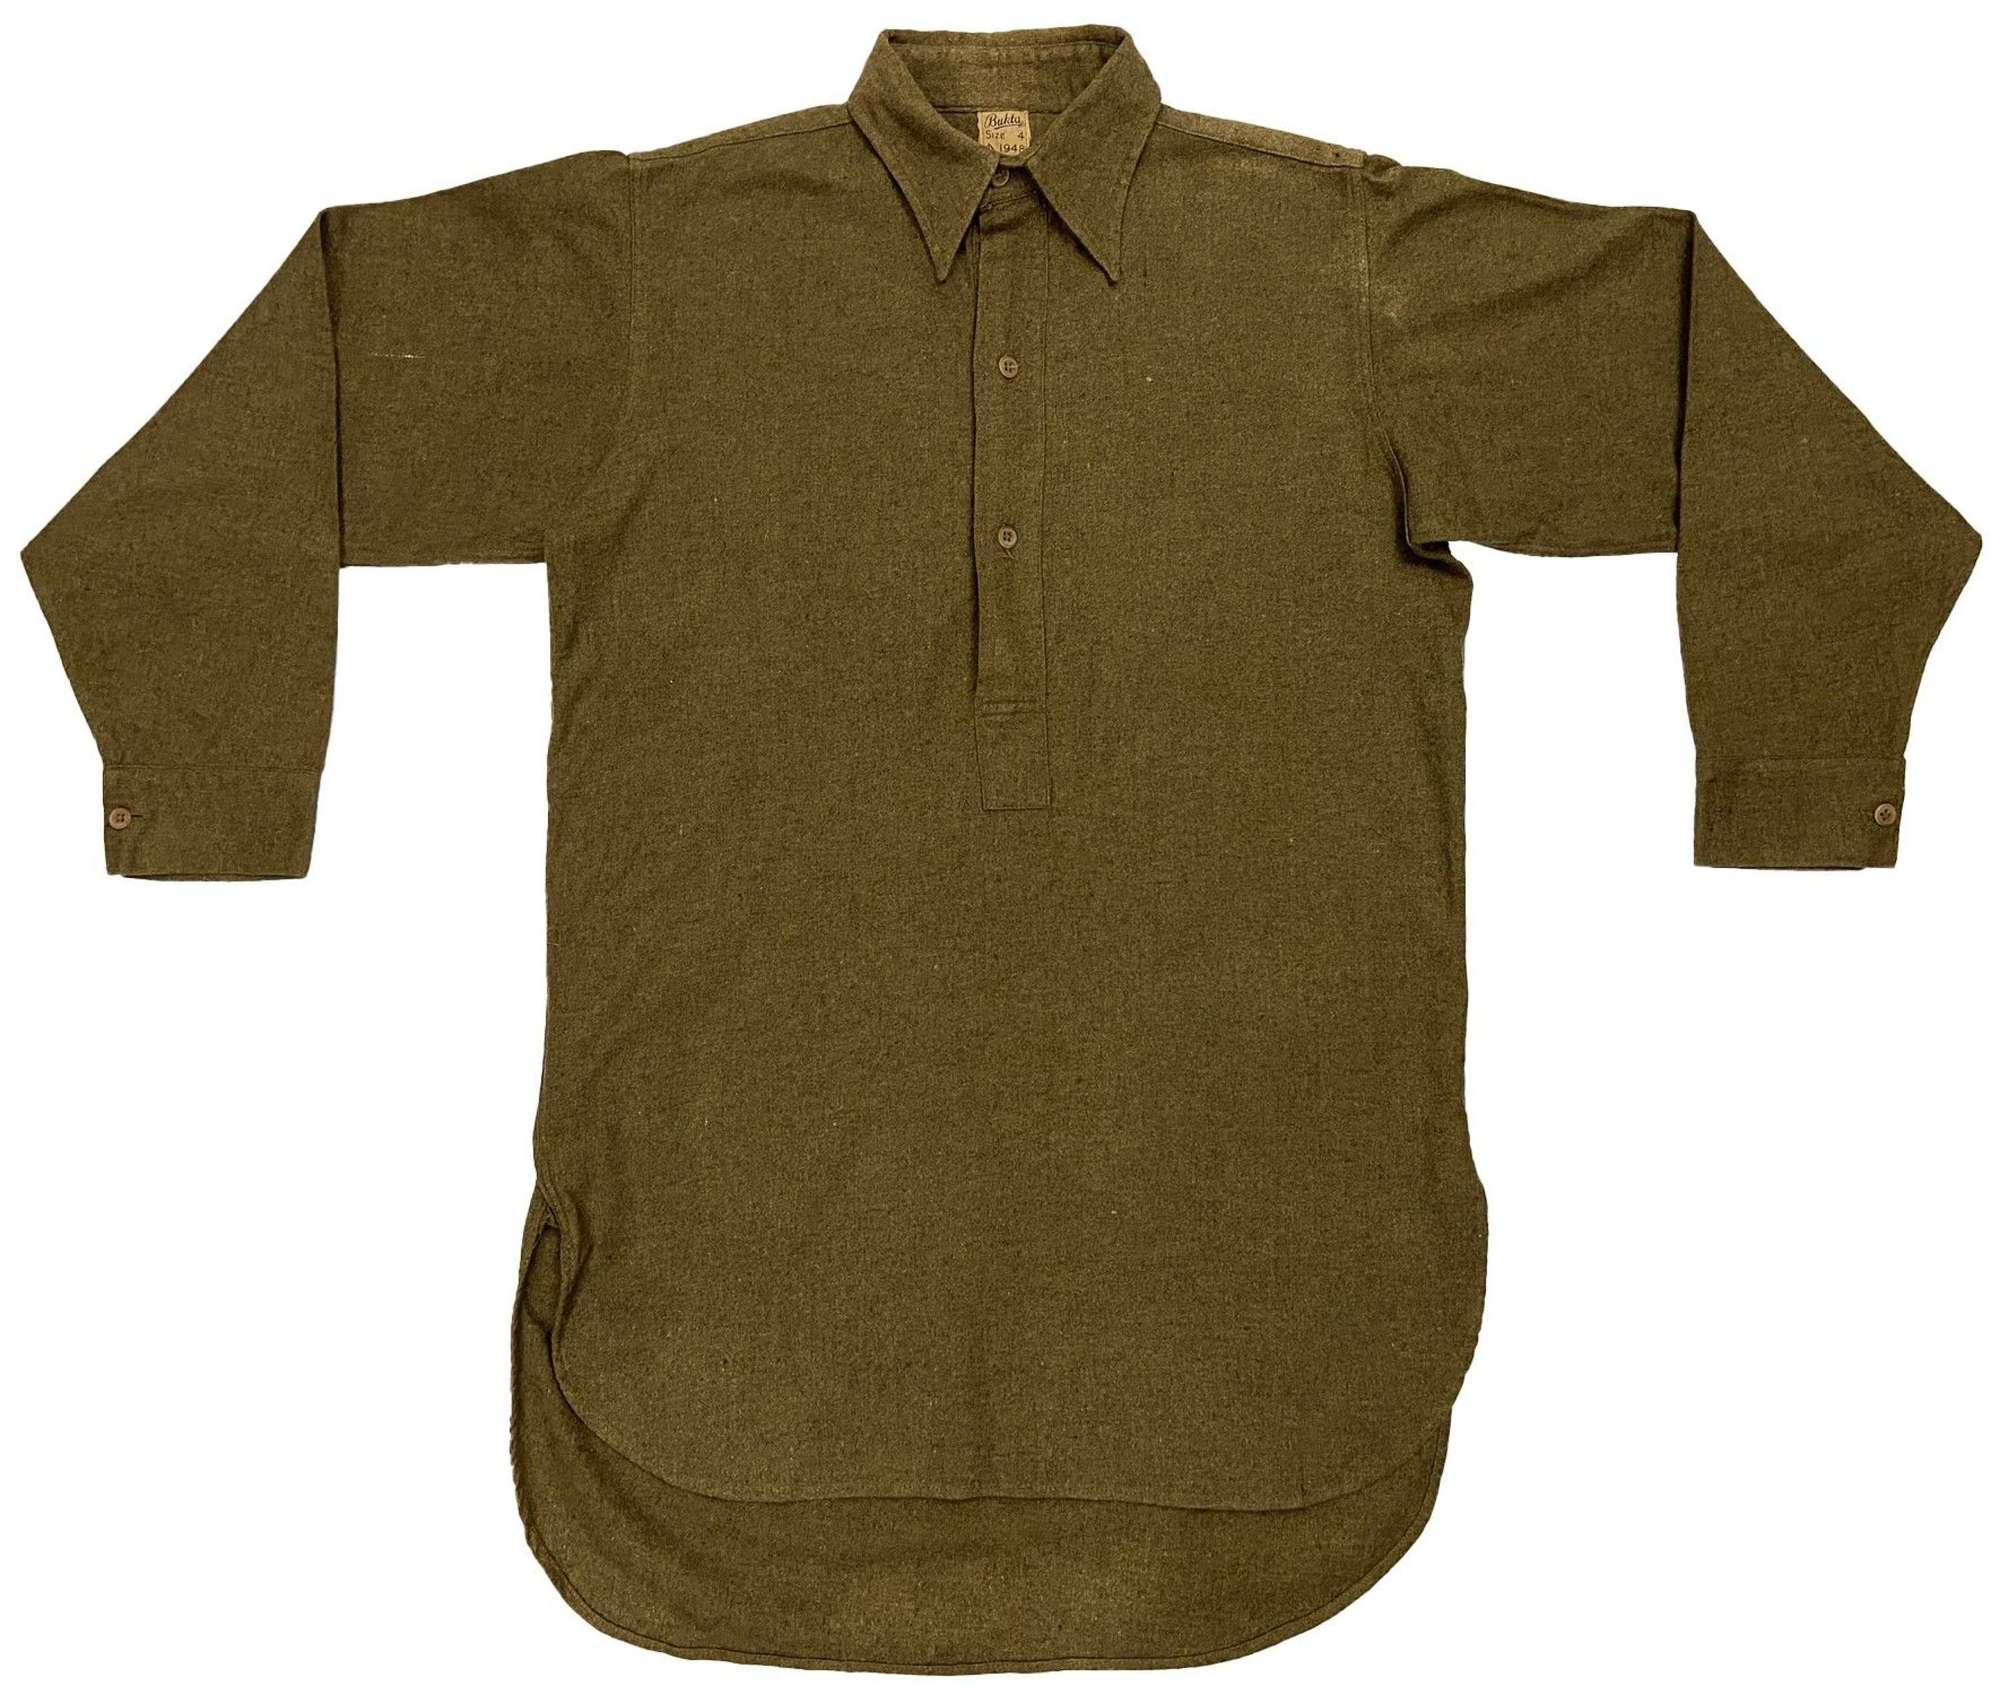 Original 1948 Dated British Army Ordinary Ranks Collared Shirt